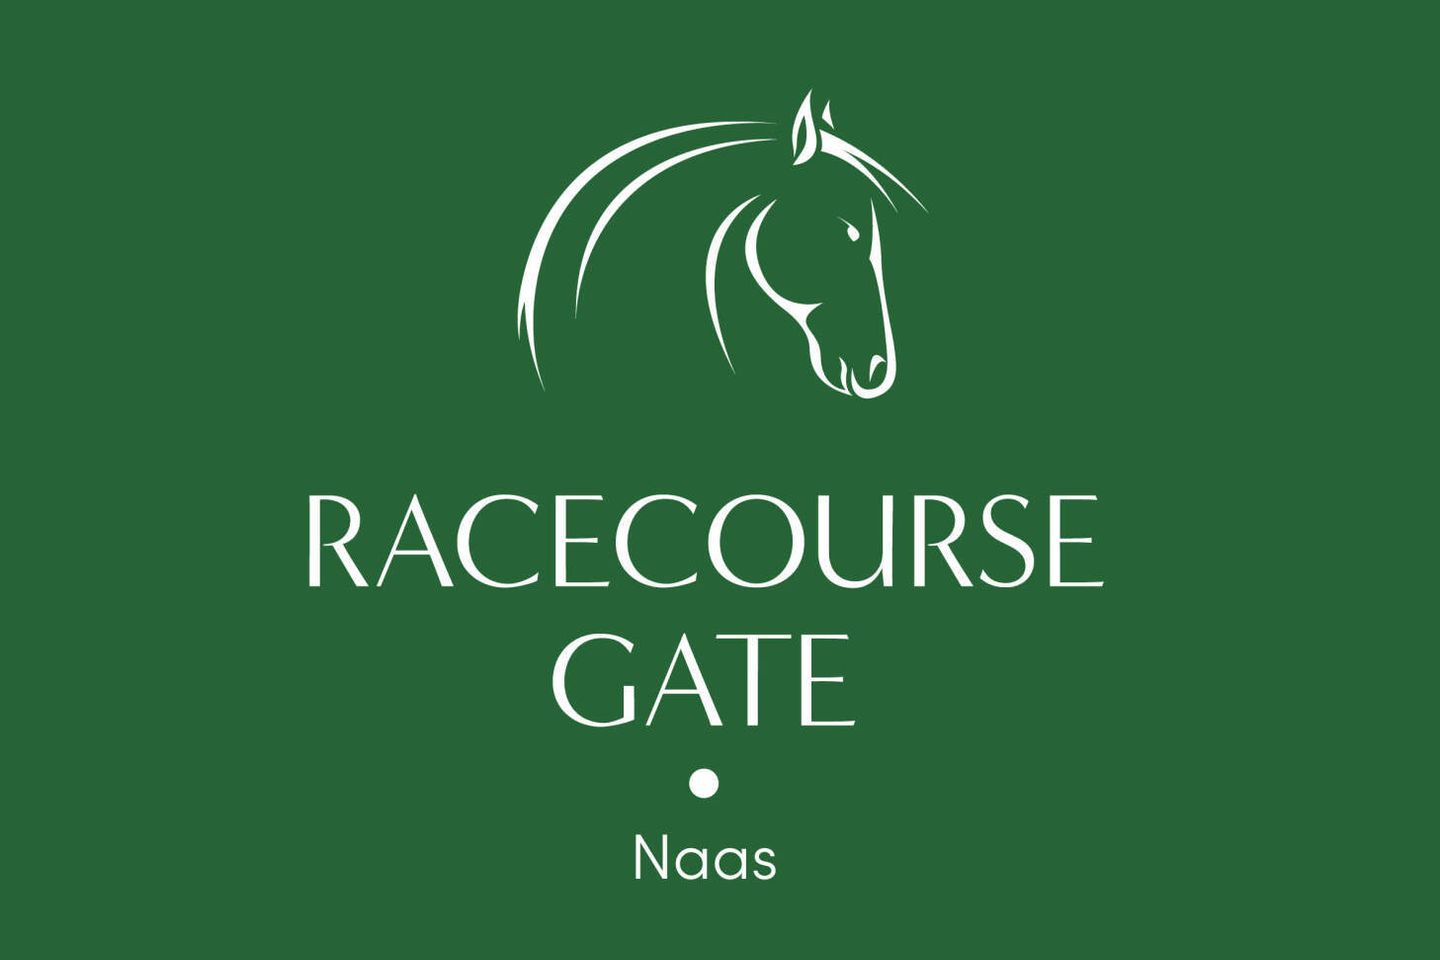 3 Bed Semi Detached, Racecourse Gate, 3 Bed Semi Detached, Racecourse Gate, Naas, Co. Kildare